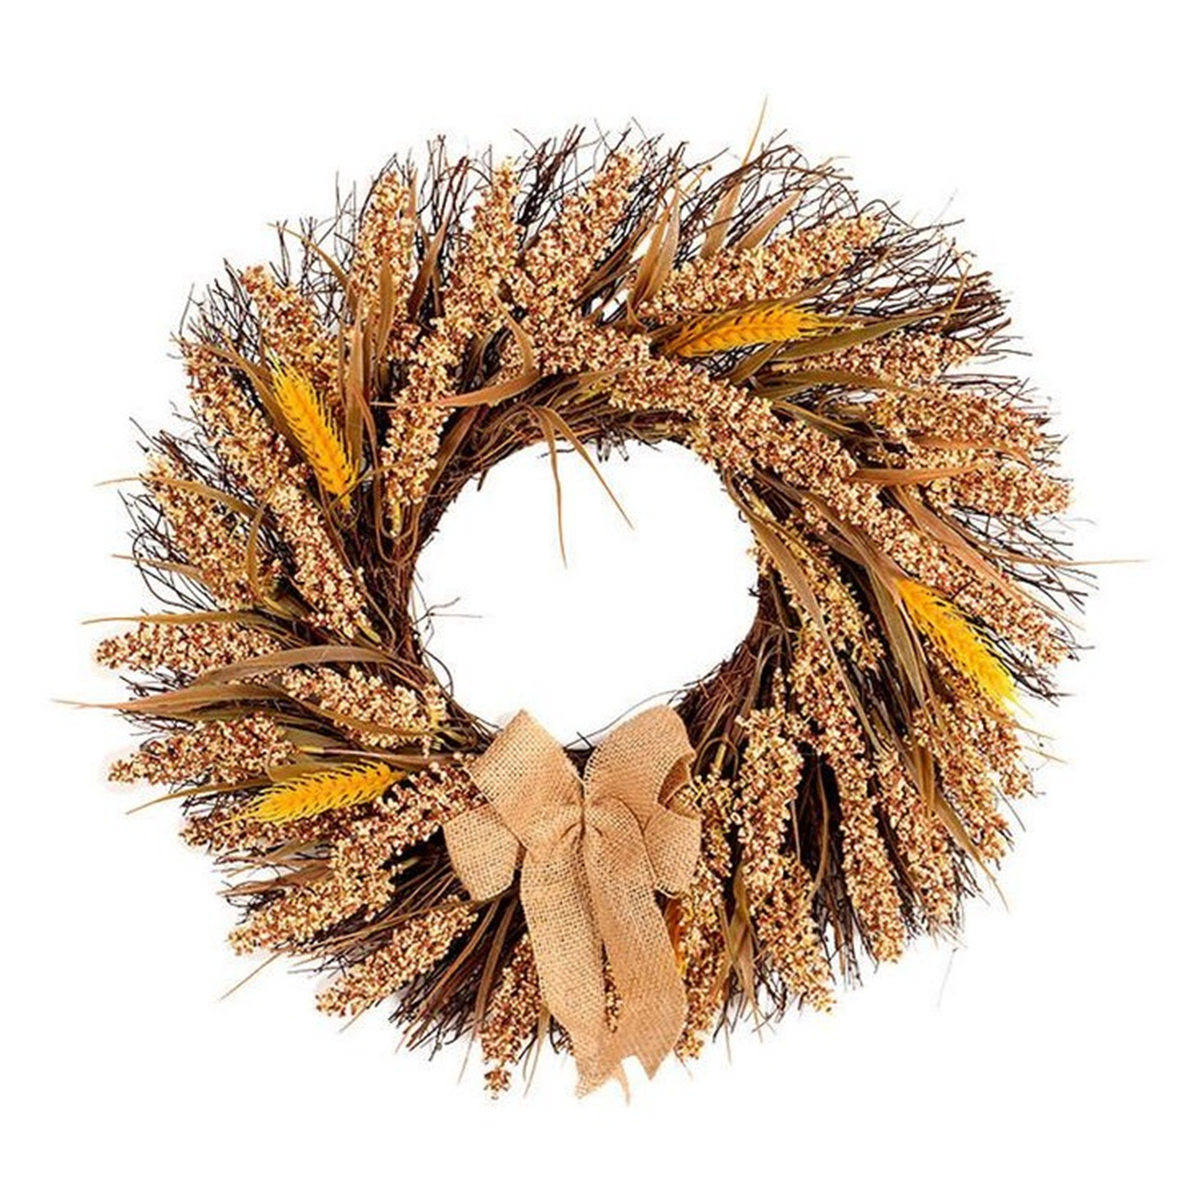 Fall-Wreath-Front-Door-Artificial-Grain-Autumn-Wreath-Harvest-Gold-Wheat-Ears-Circle-Garland-Fall-Ho-1585758-1